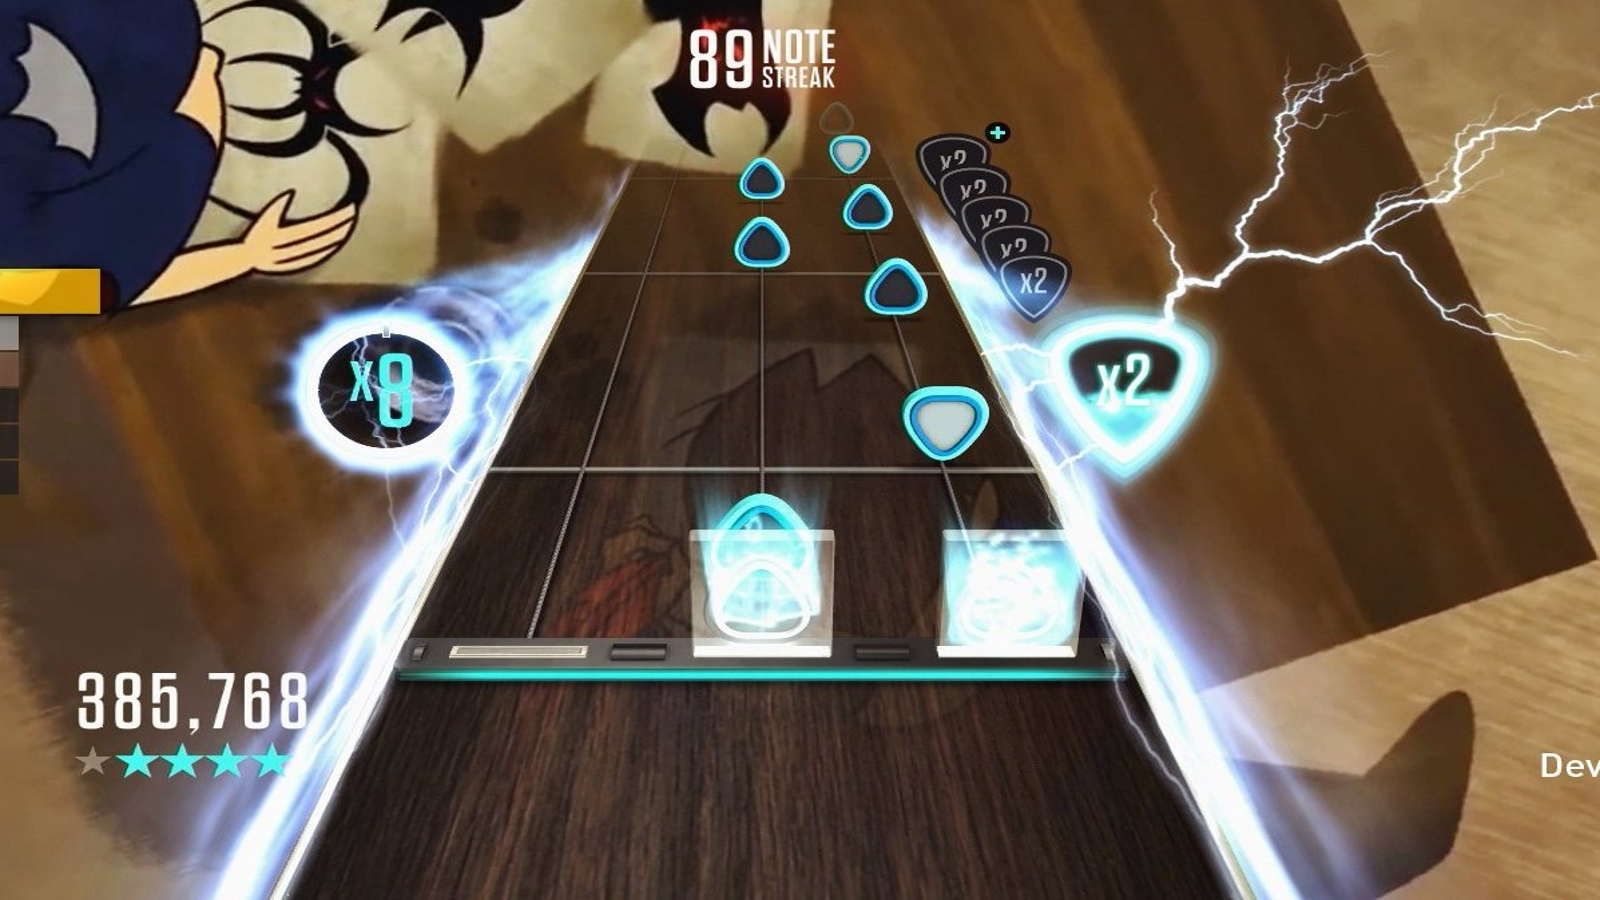 Guitar Hero: confira códigos e macetes para os jogos da série